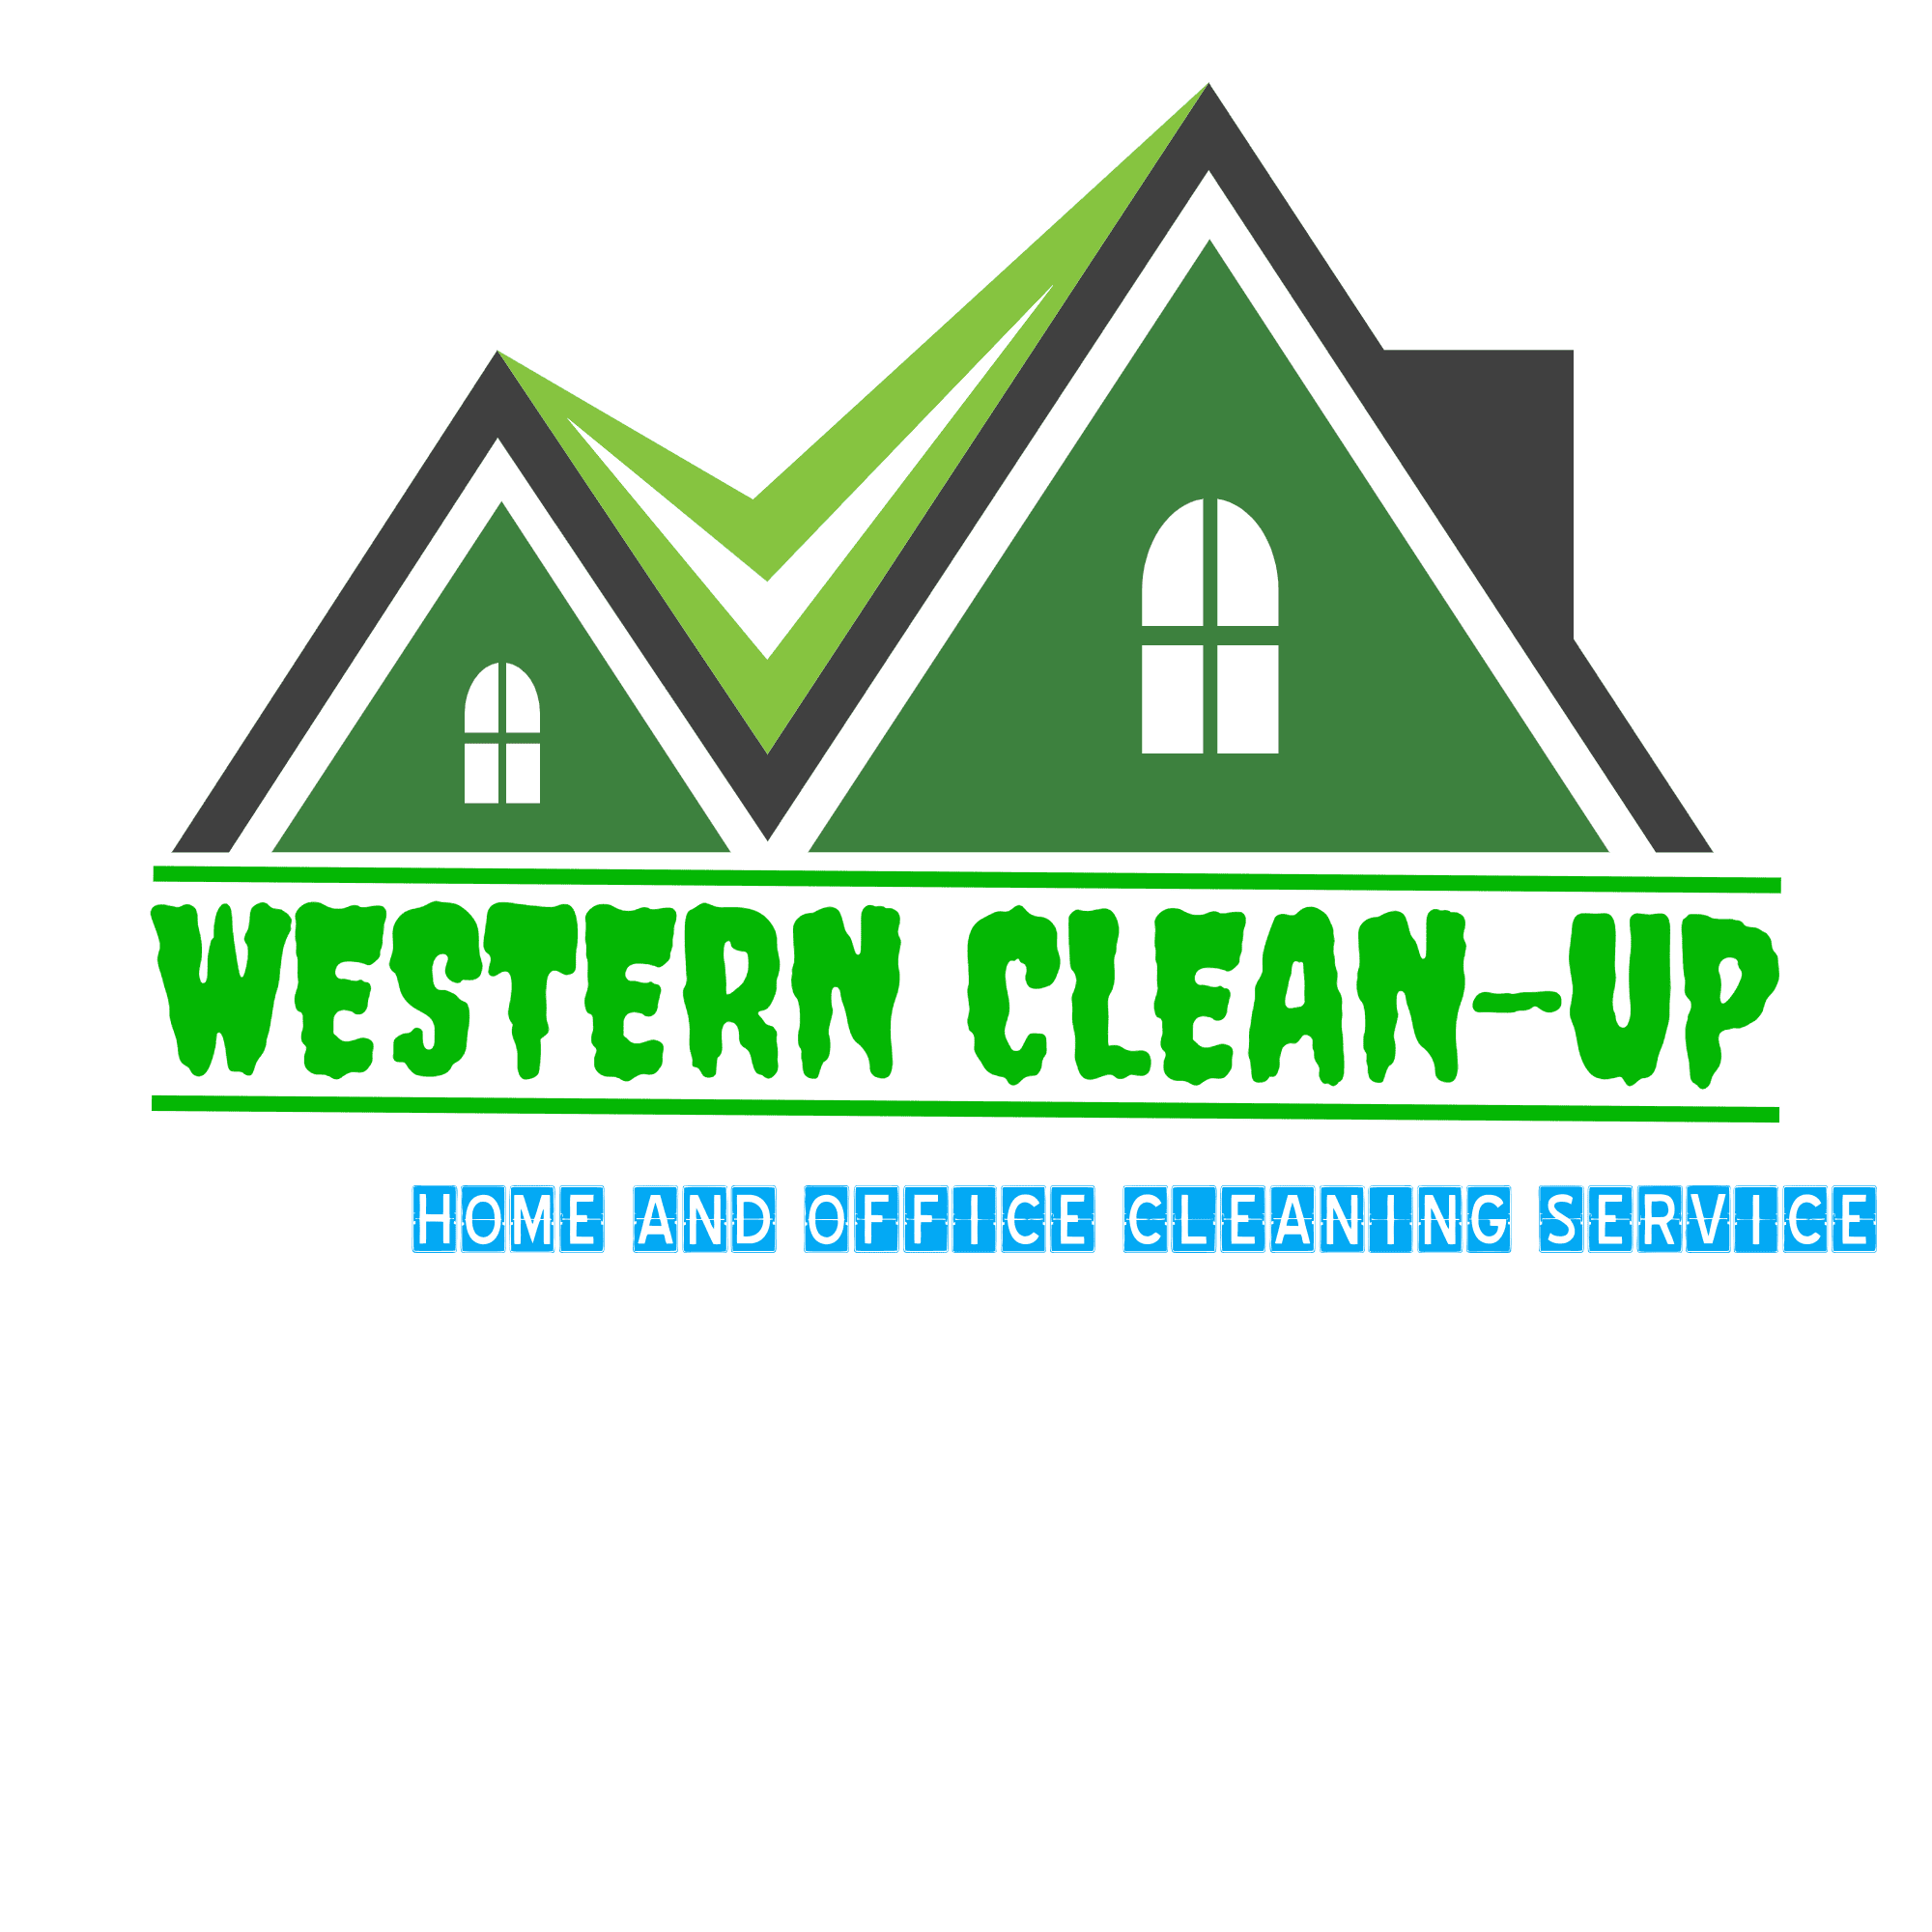 Western Cleanup